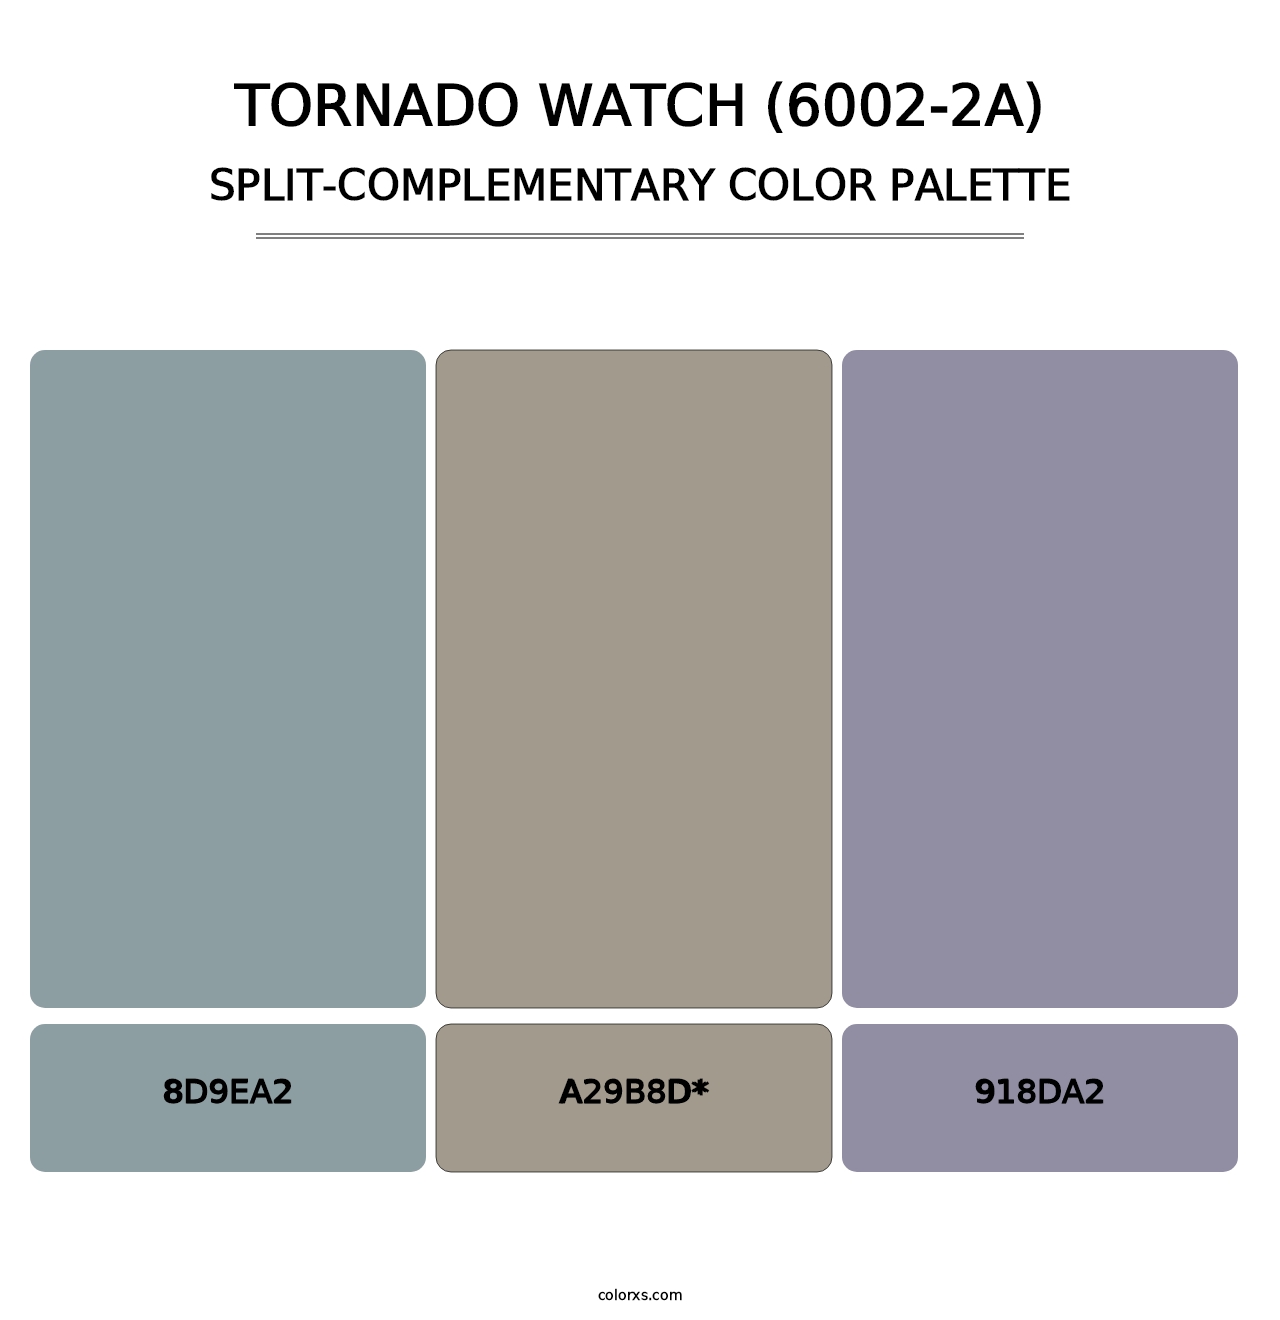 Tornado Watch (6002-2A) - Split-Complementary Color Palette